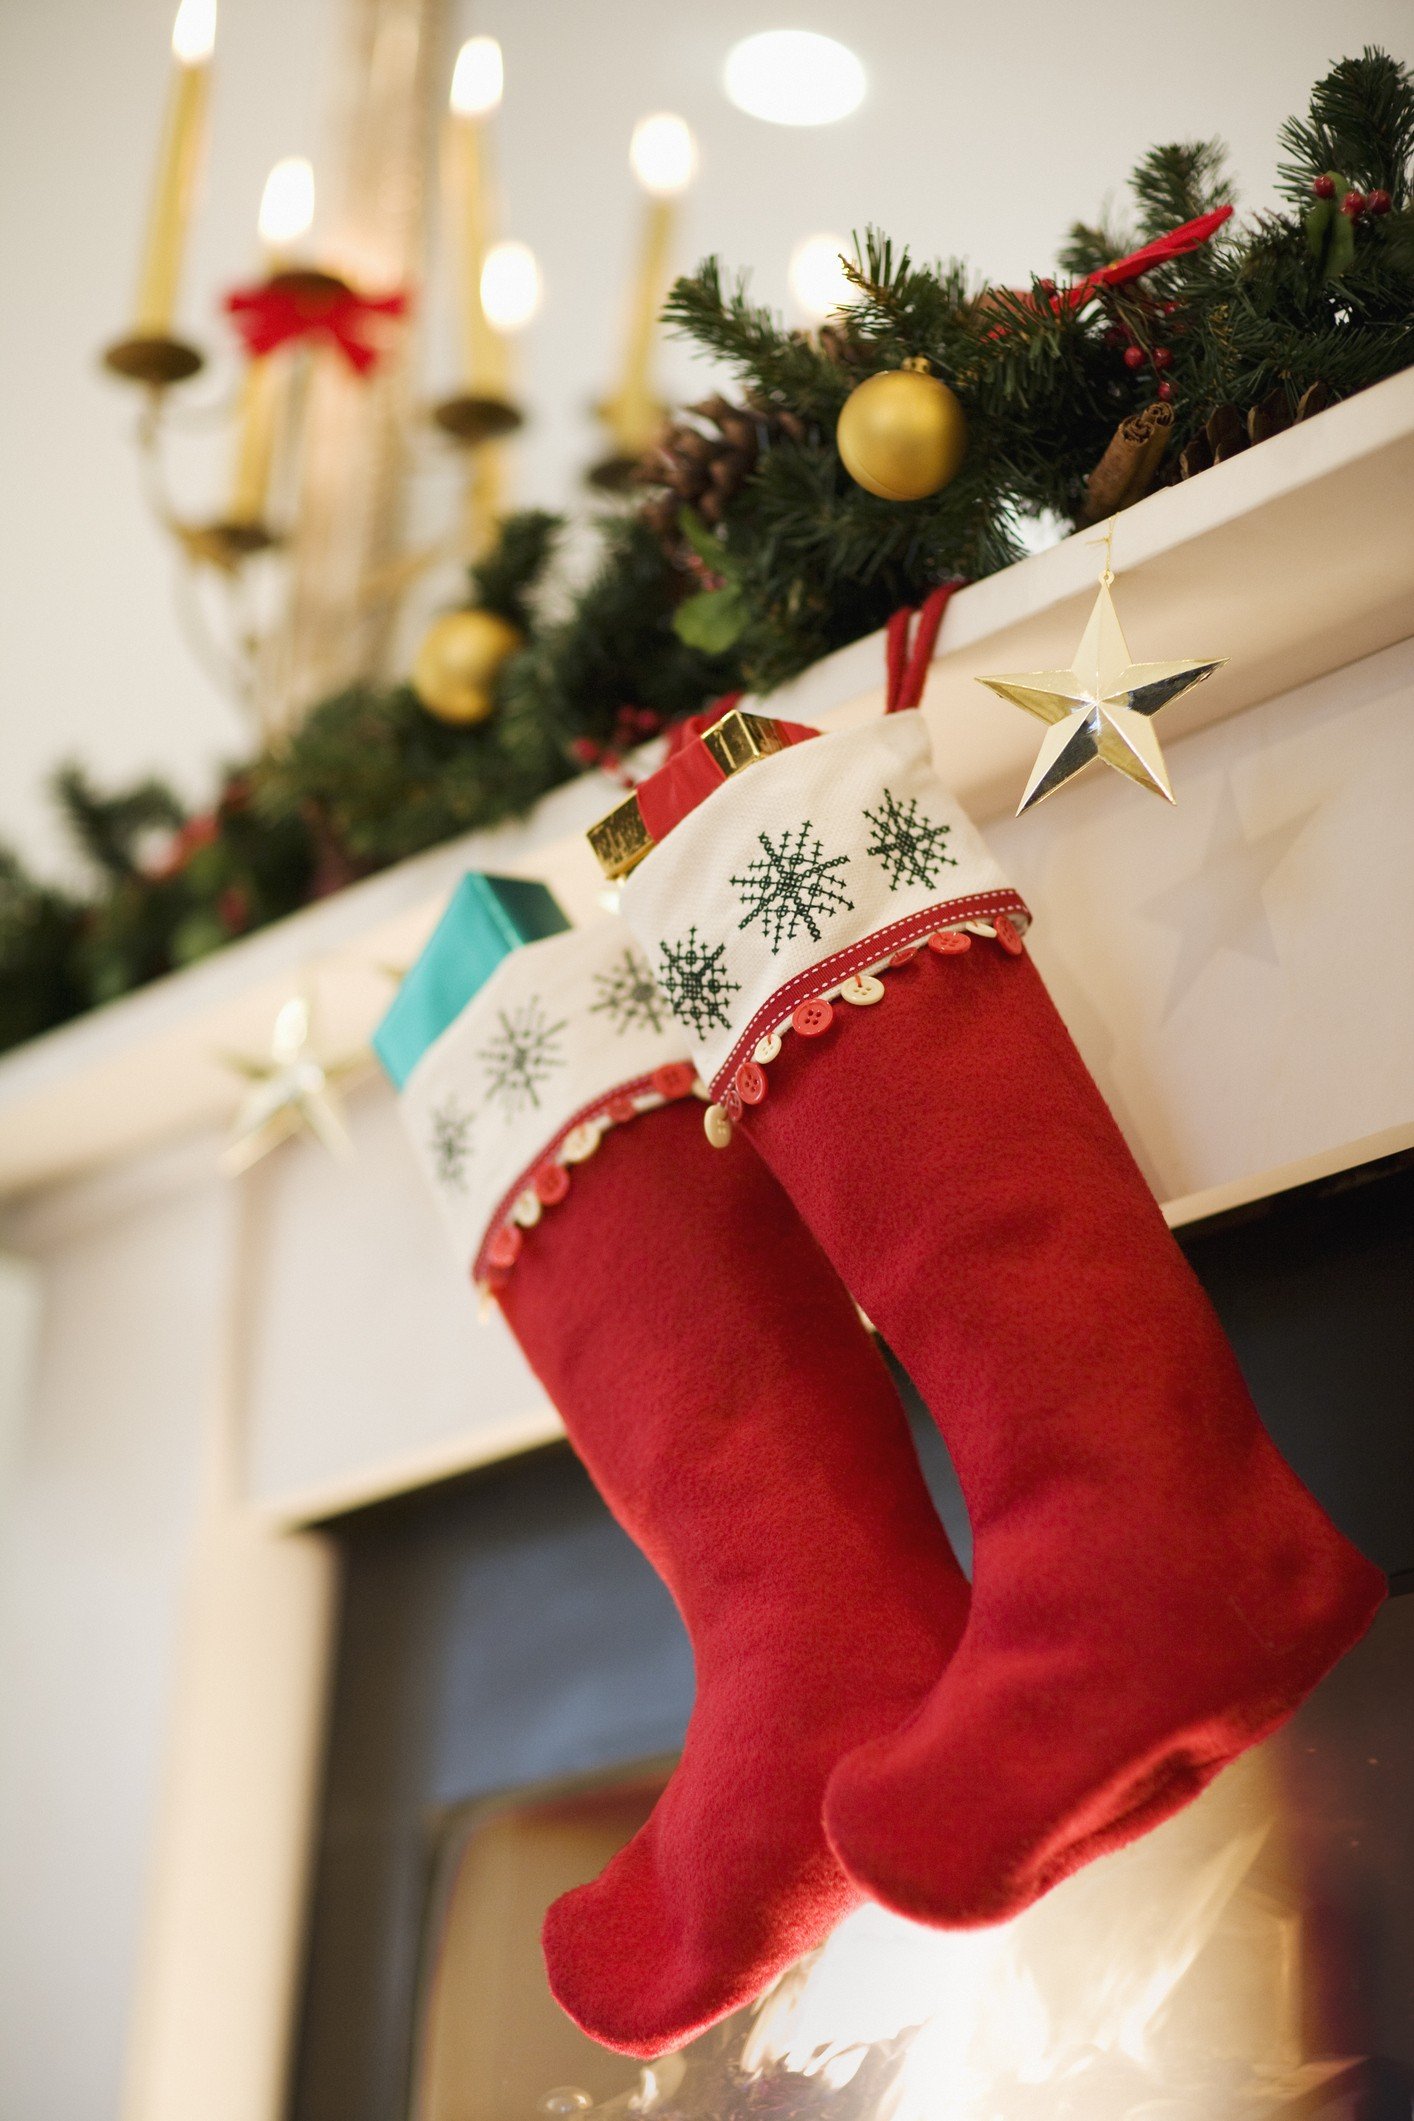 Christmas stockings hanging on fireplace mantel